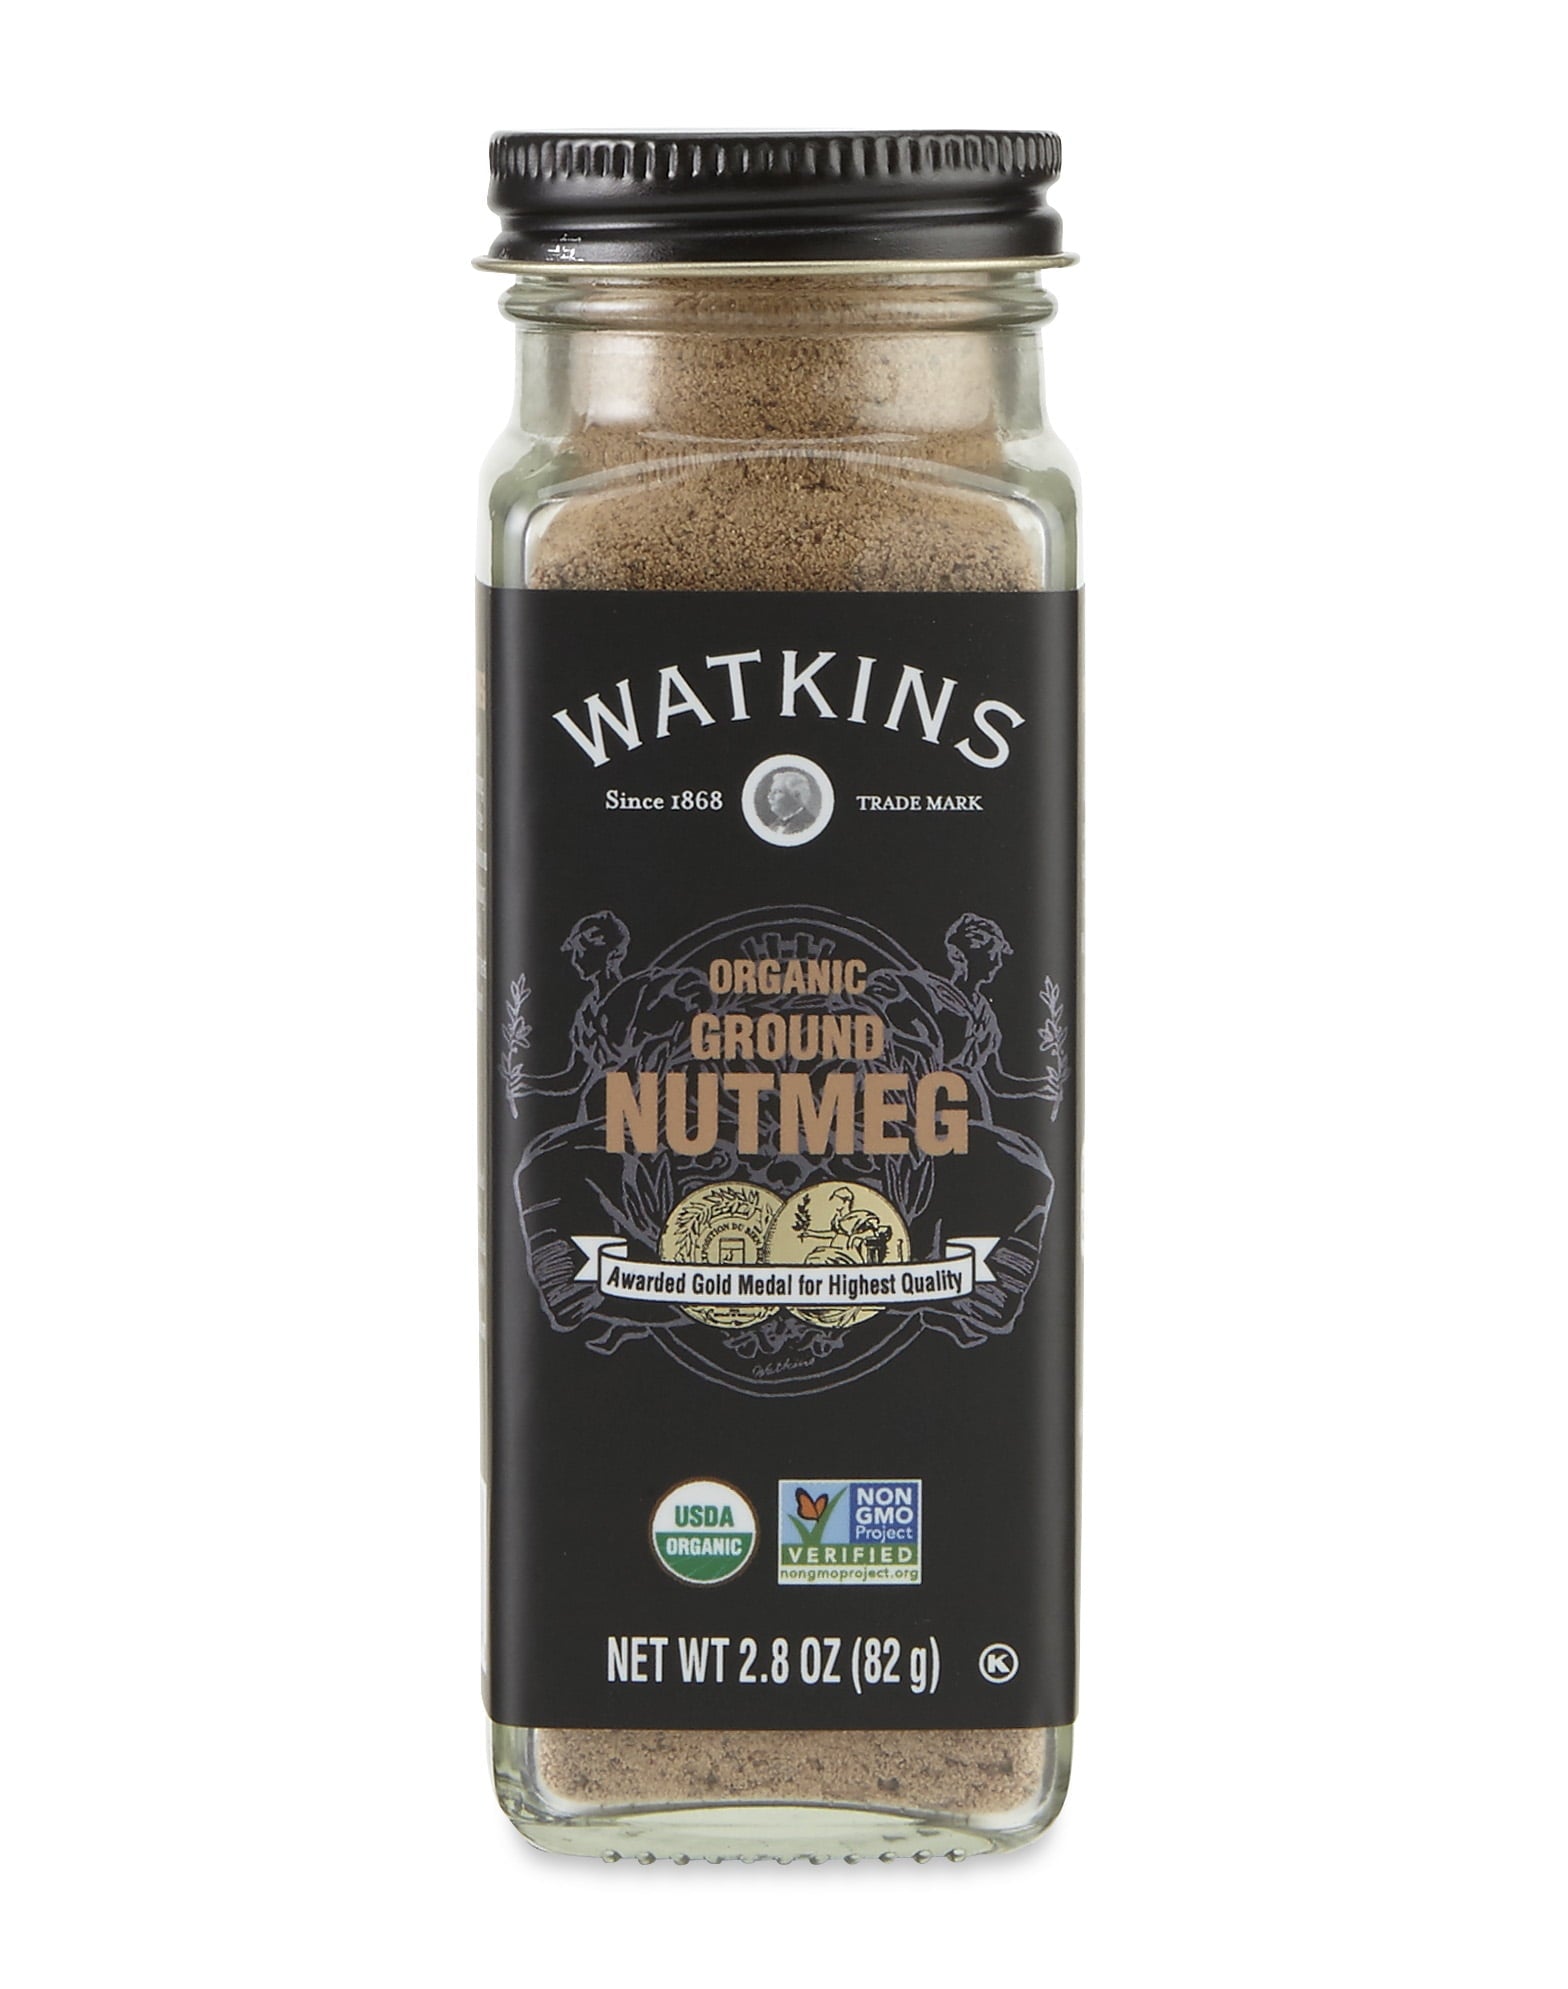 Watkins Organic Ground Nutmeg Seasoning 2.8 Oz Jar